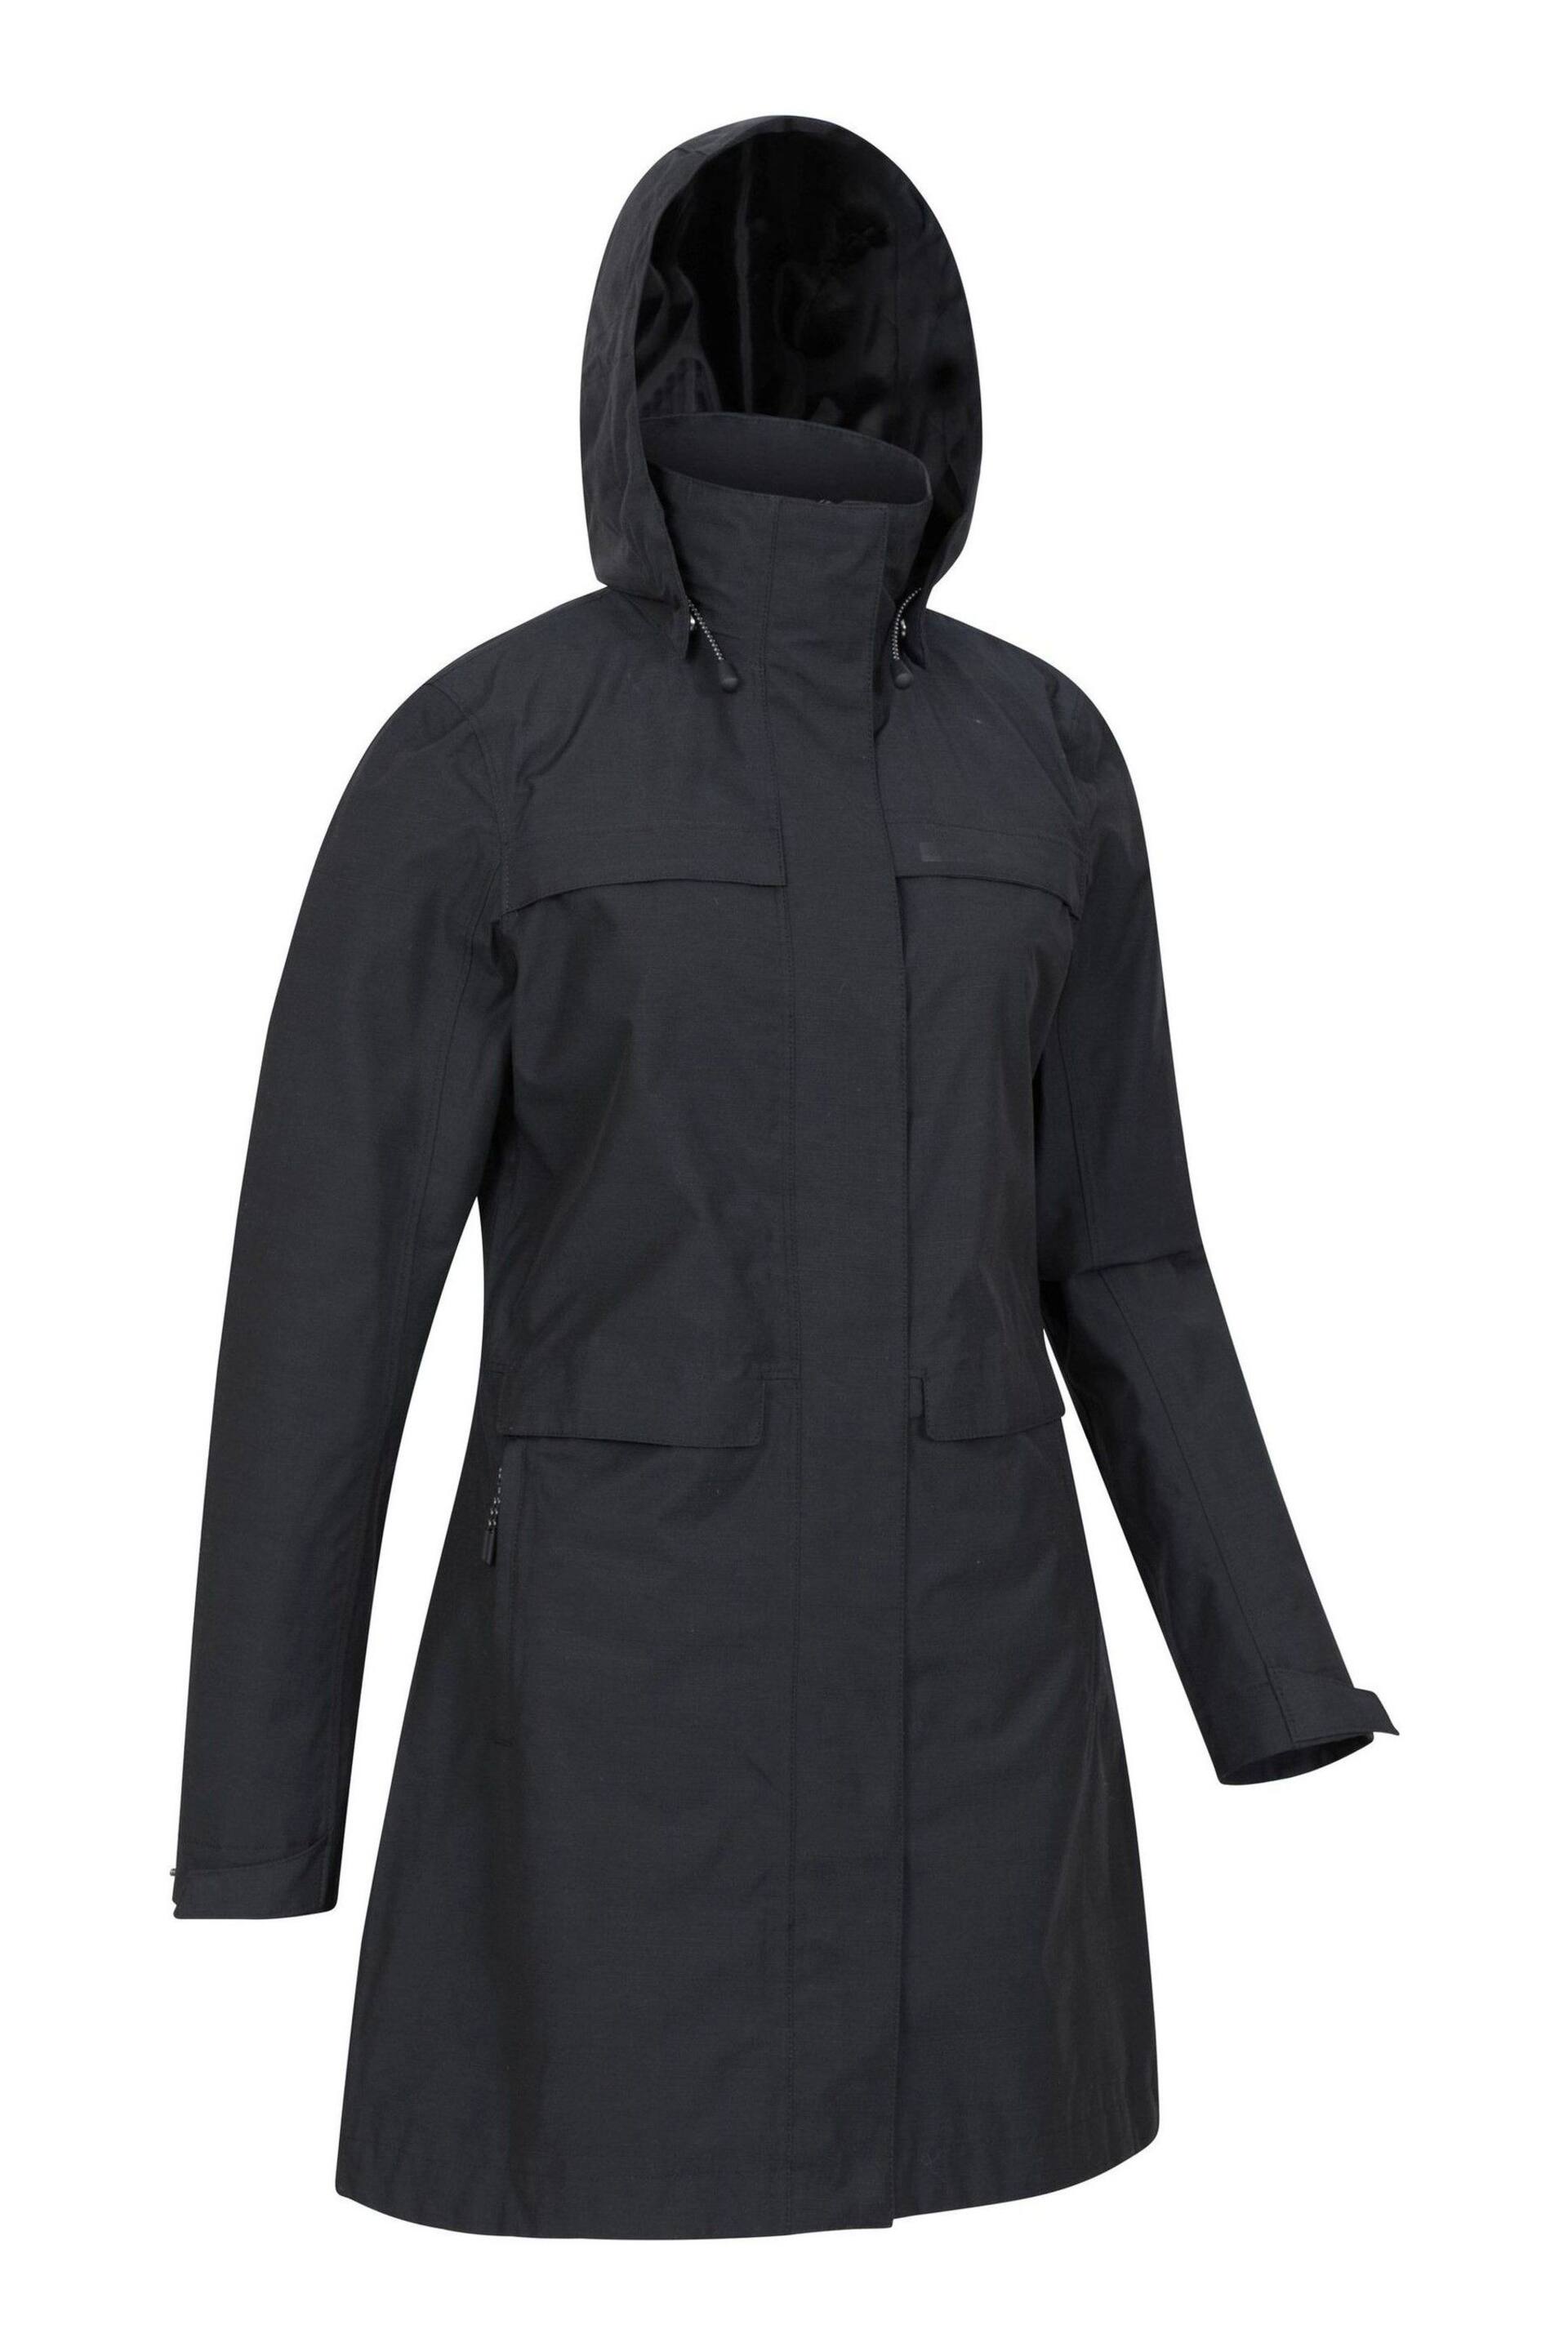 Mountain Warehouse Black Cloud Burst Textured Waterproof Jacket - Womens - Image 2 of 6